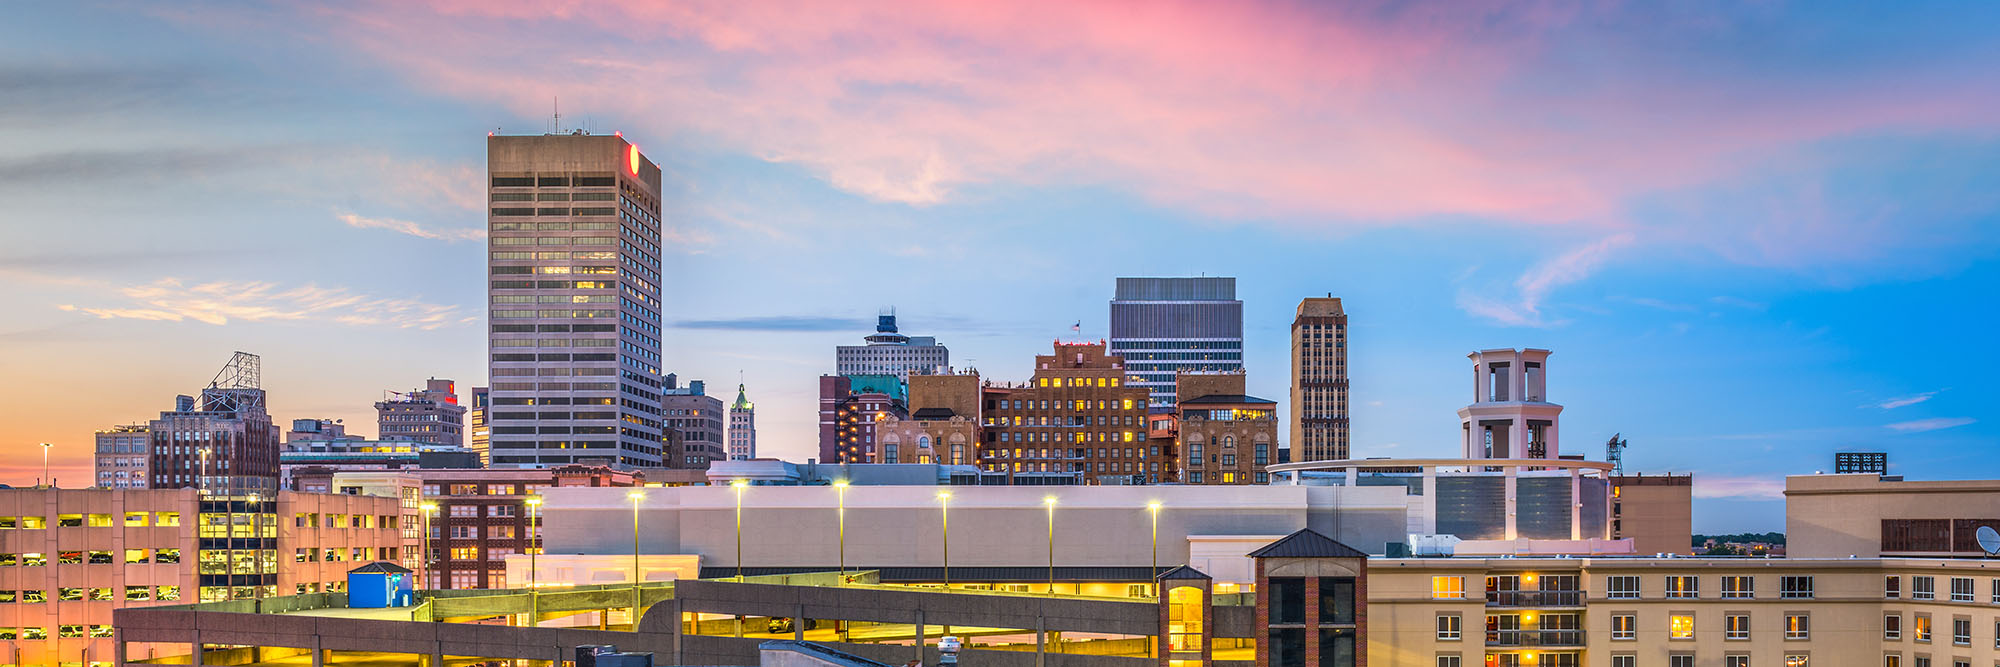 Memphis, Tennessee, USA skyline over Beale Street